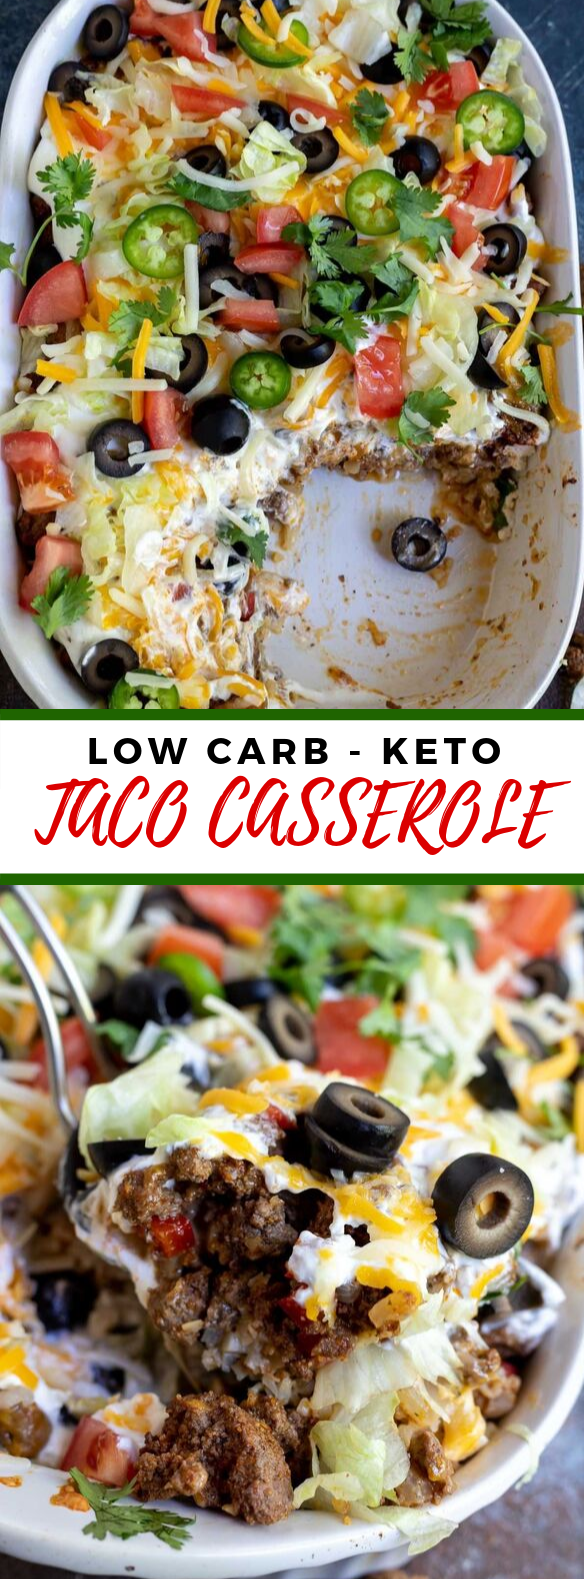 Low Carb Taco Casserole Recipe #healthy #ketodiet